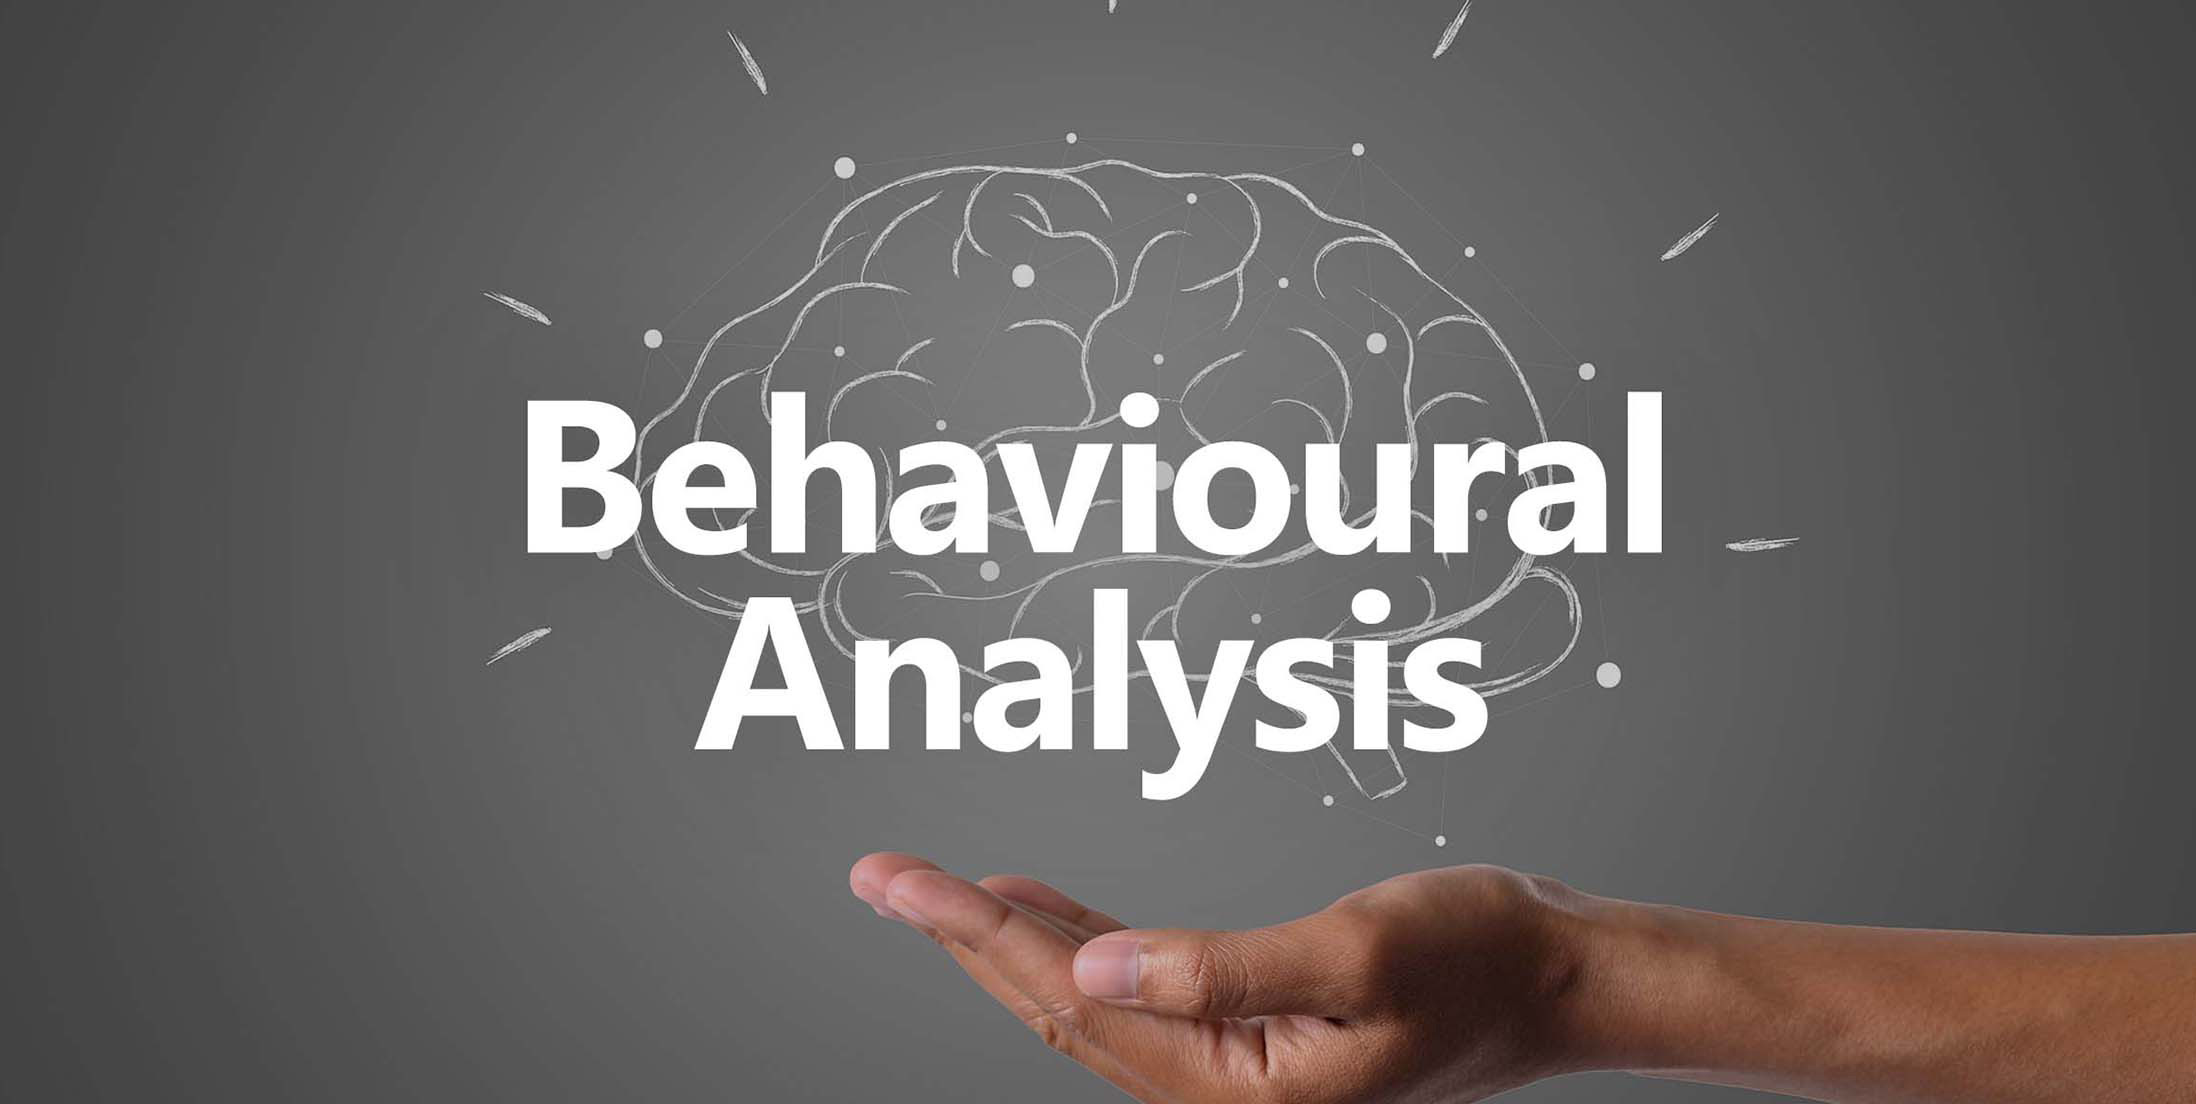 Behavioural Analysis